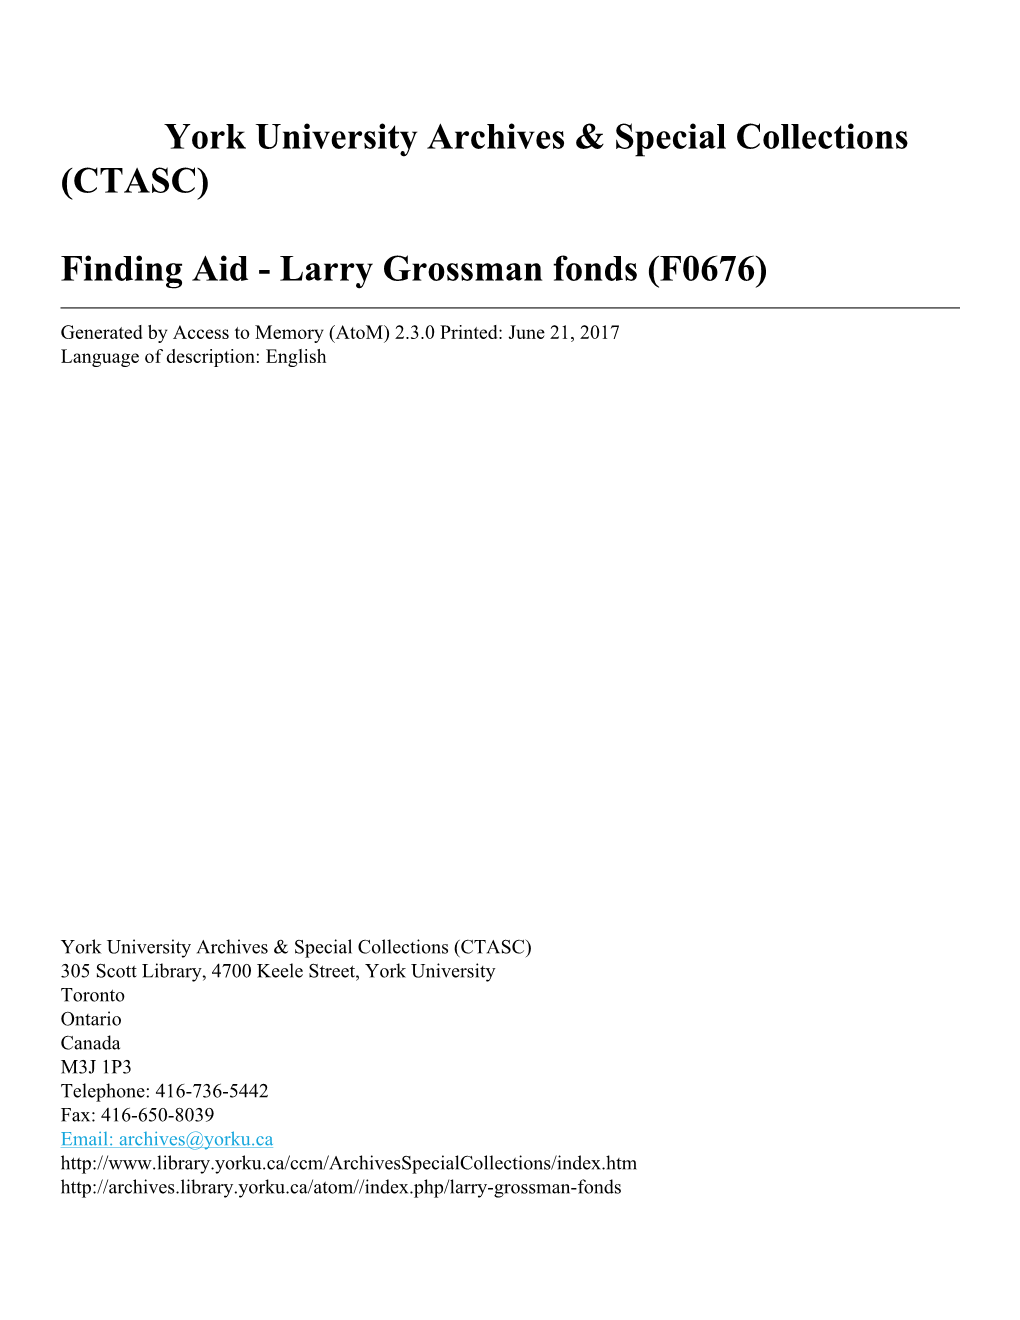 Larry Grossman Fonds (F0676)